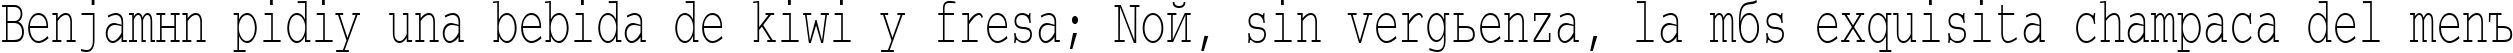 Пример написания шрифтом CourierCTT_65 текста на испанском